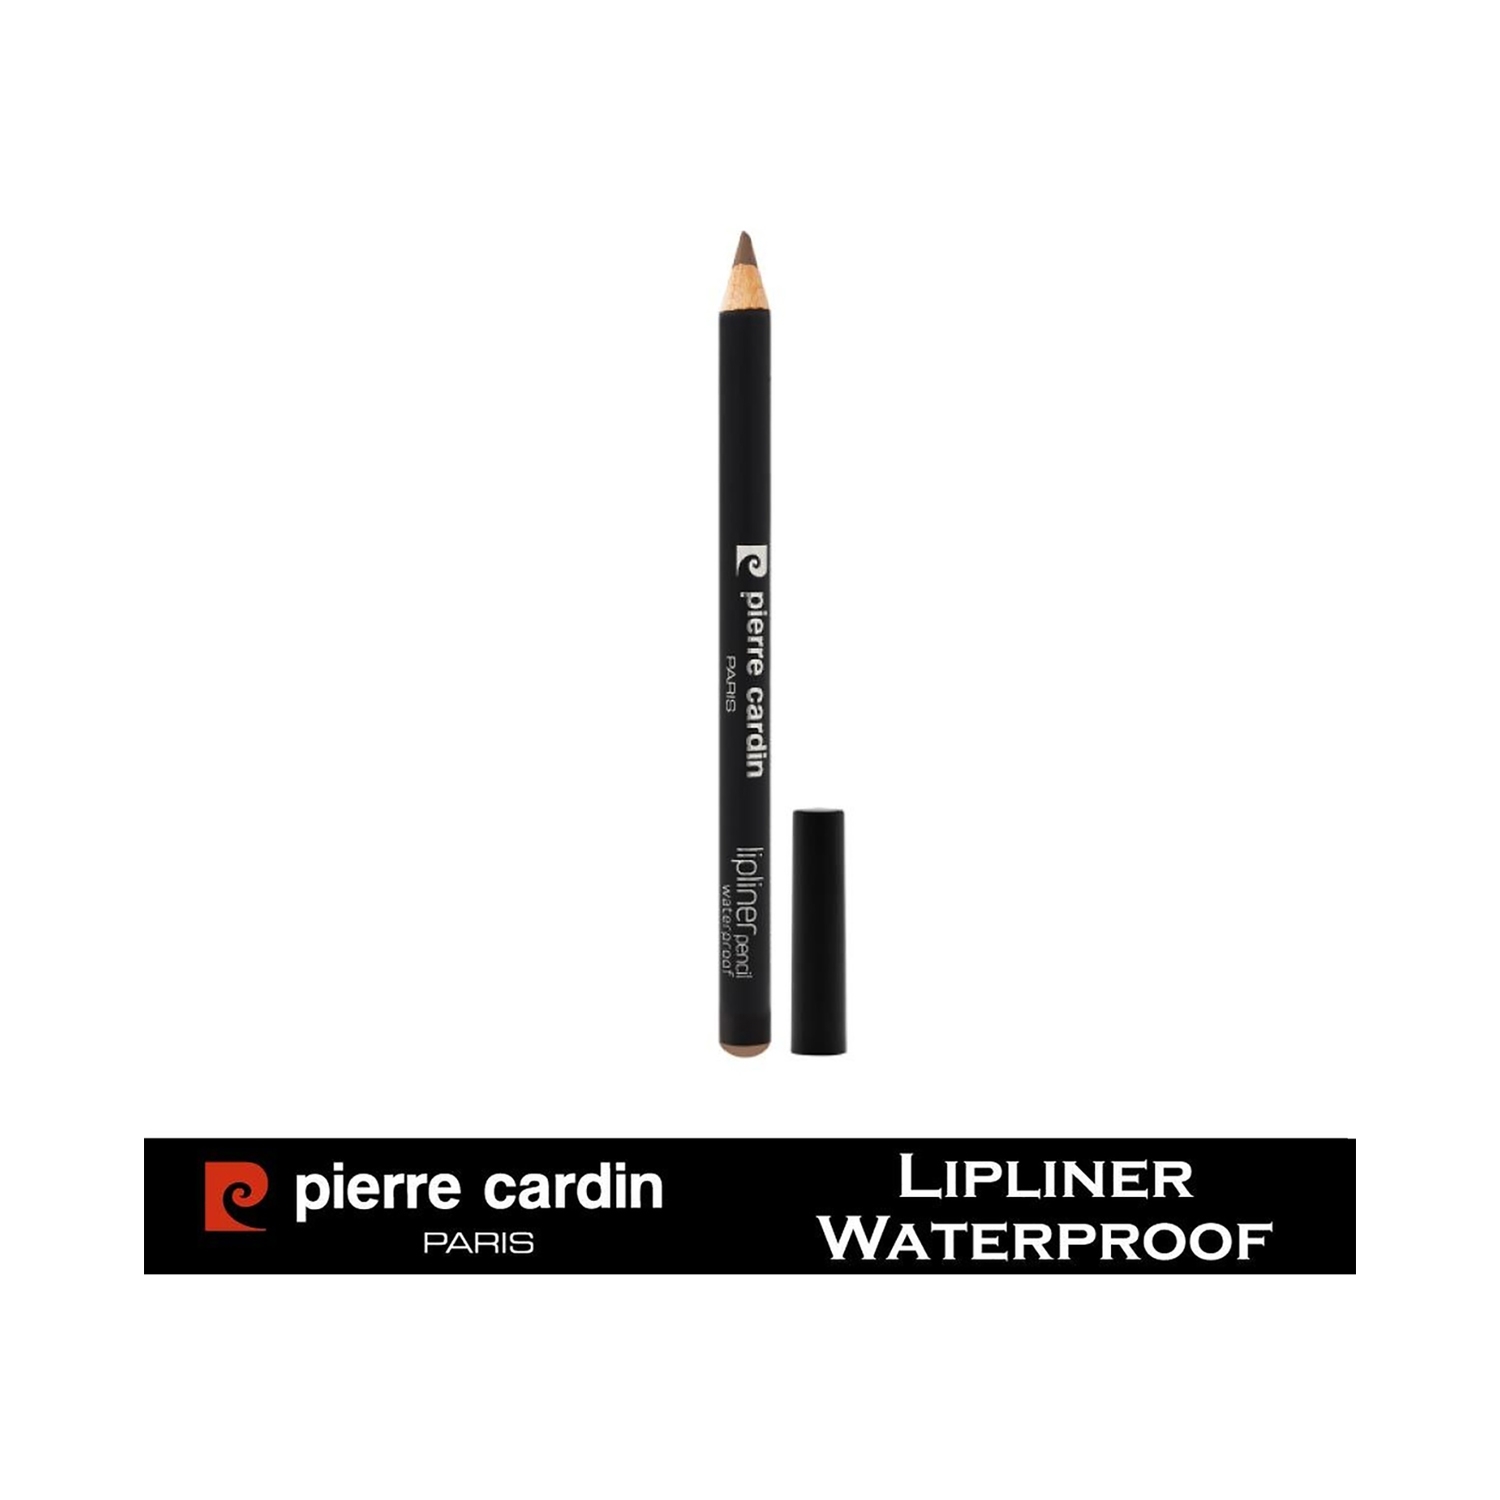 Pierre Cardin Paris | Pierre Cardin Paris Waterproof Lip Liner Pencil - 390 Terra Coffee (0.4g)